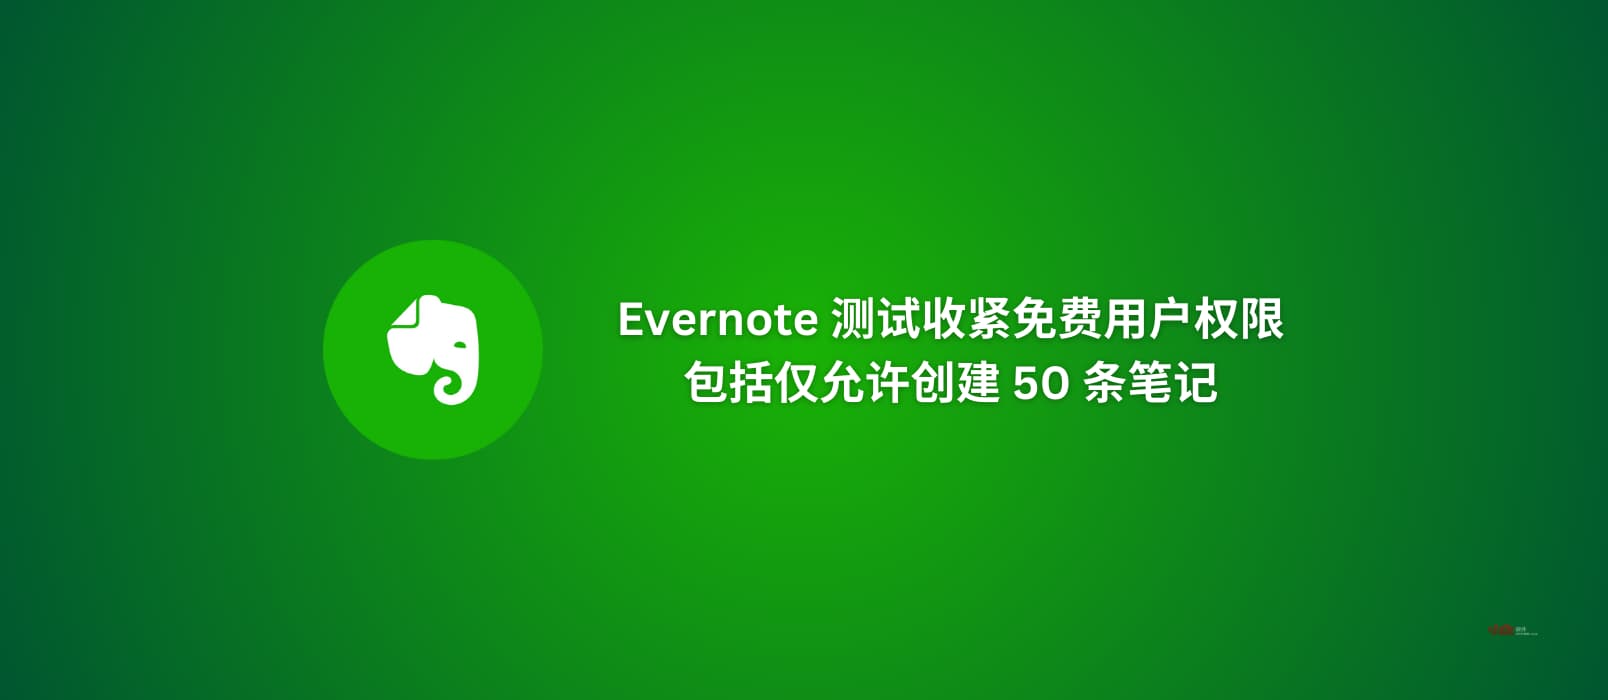 Evernote 测试收紧免费用户权限，包括仅允许创建 50 条笔记